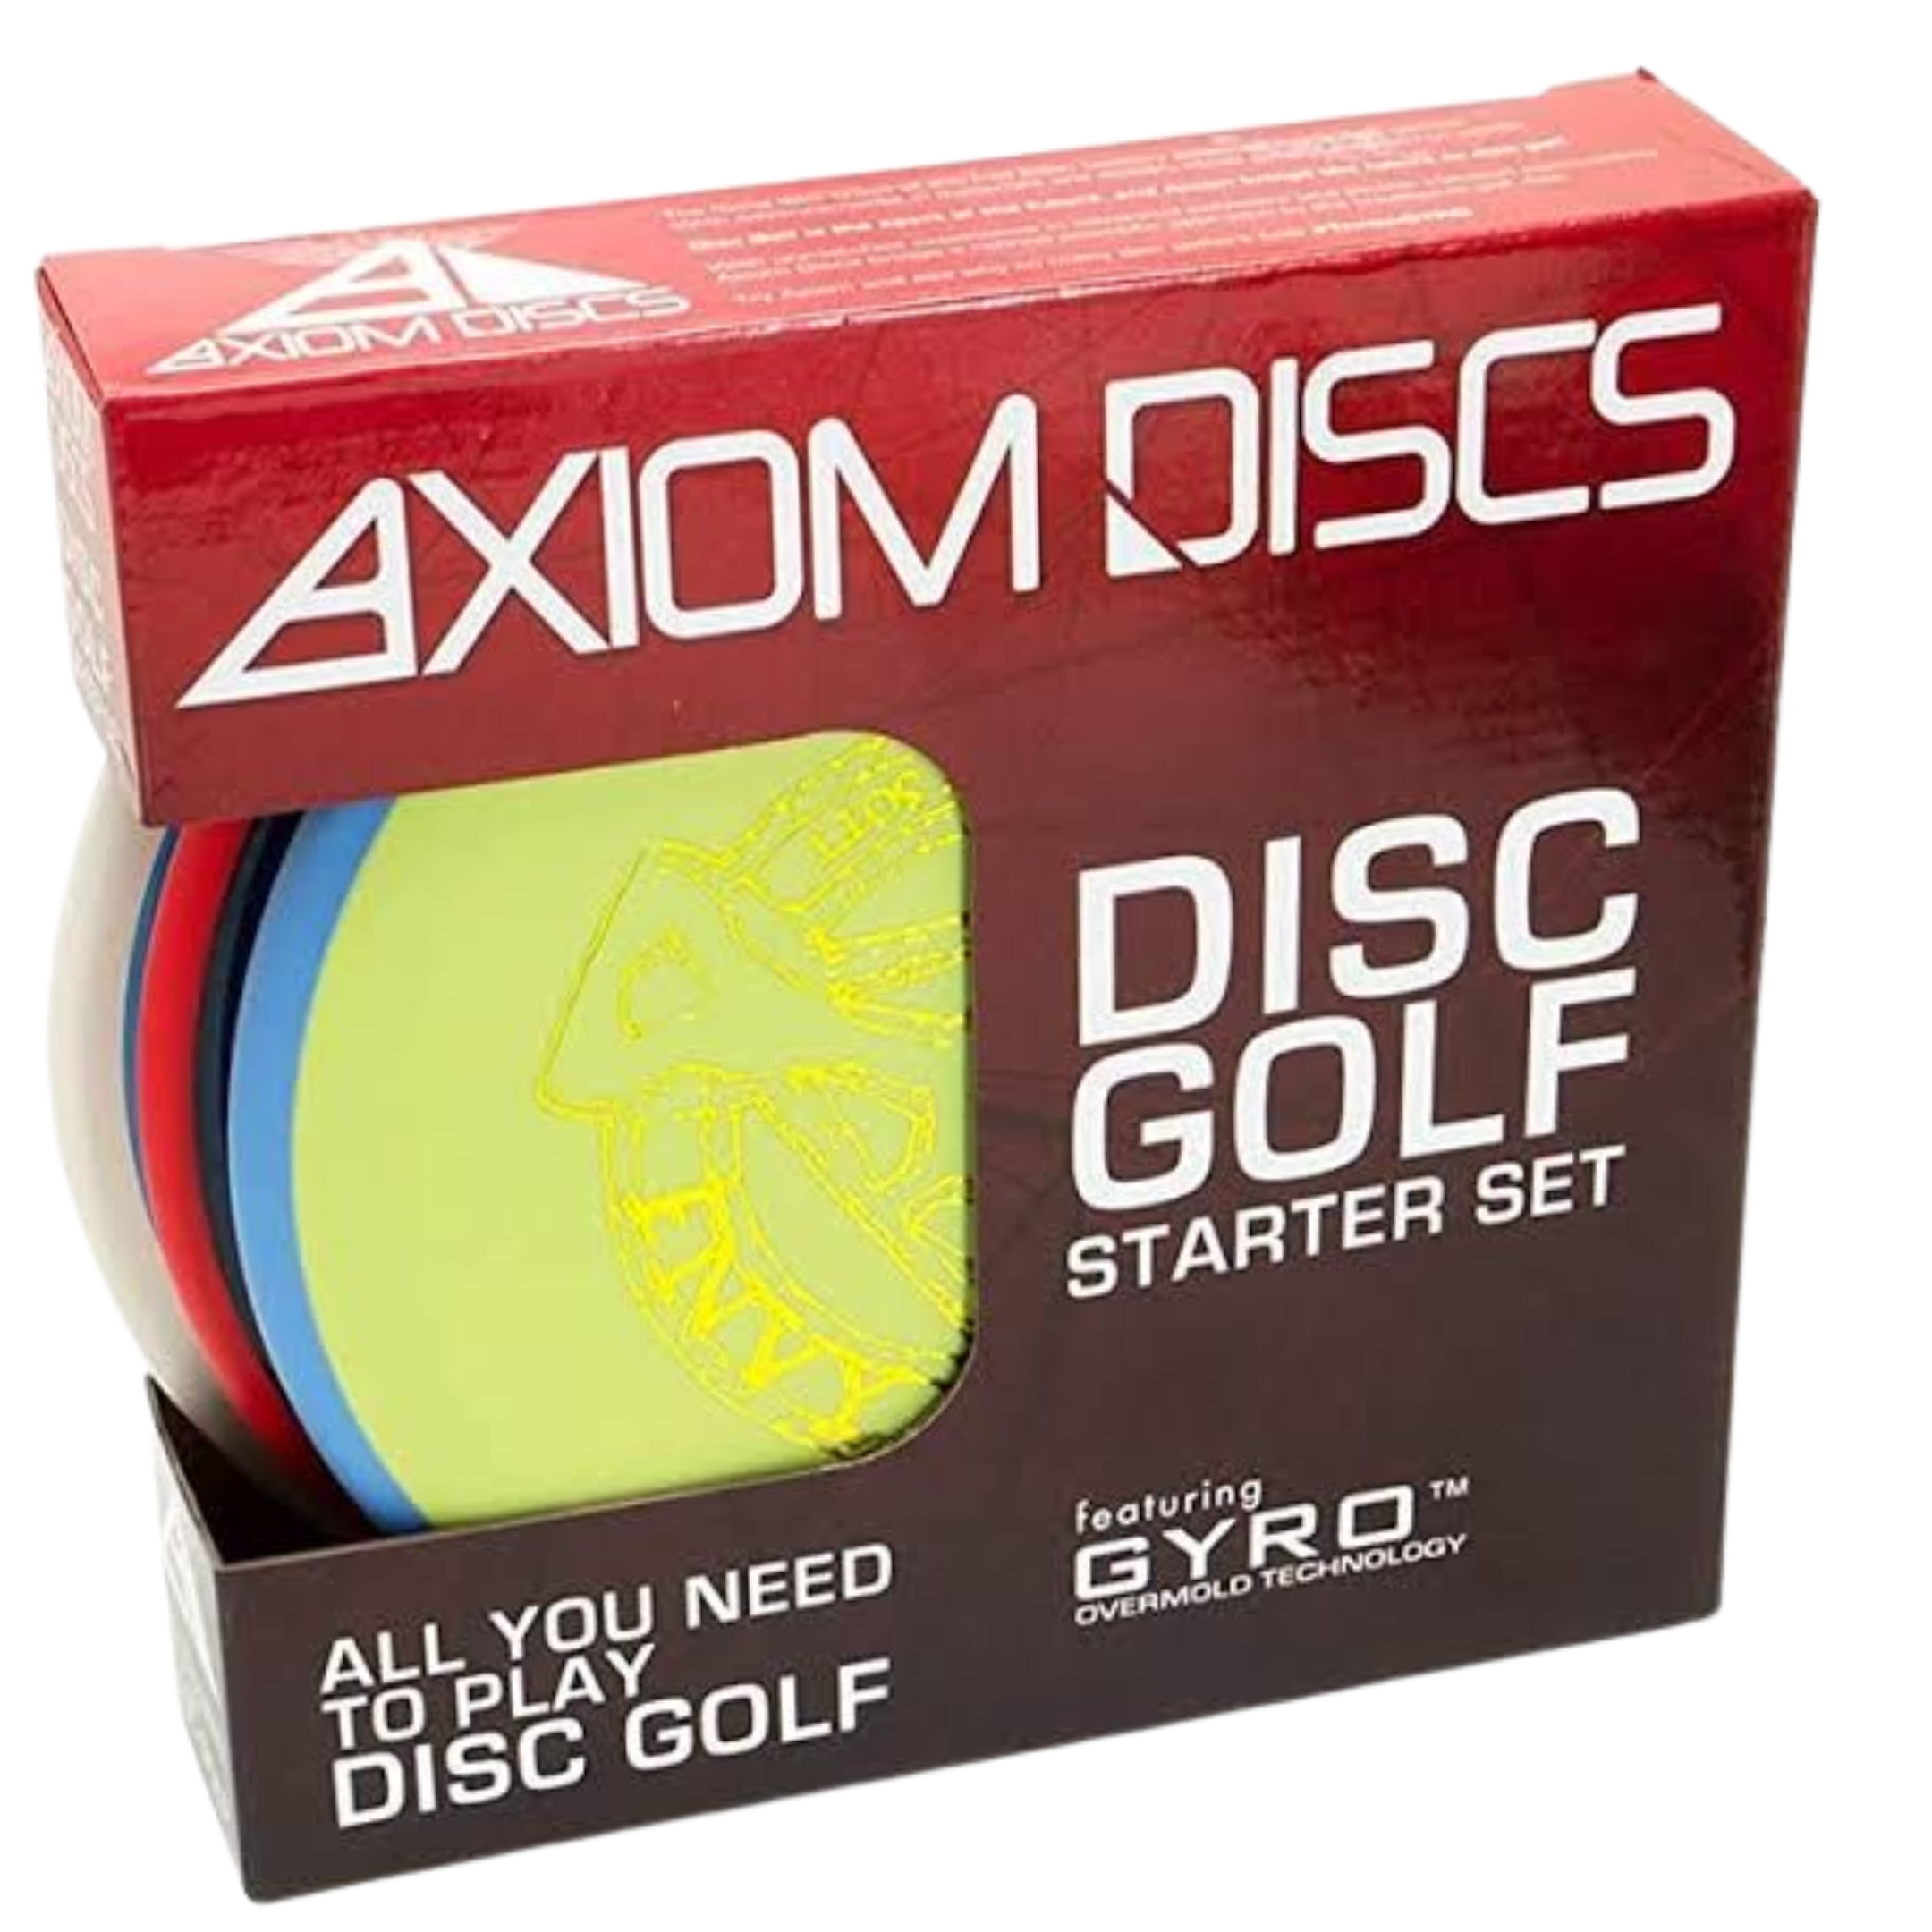 Axiom Premium Starter Pack Set